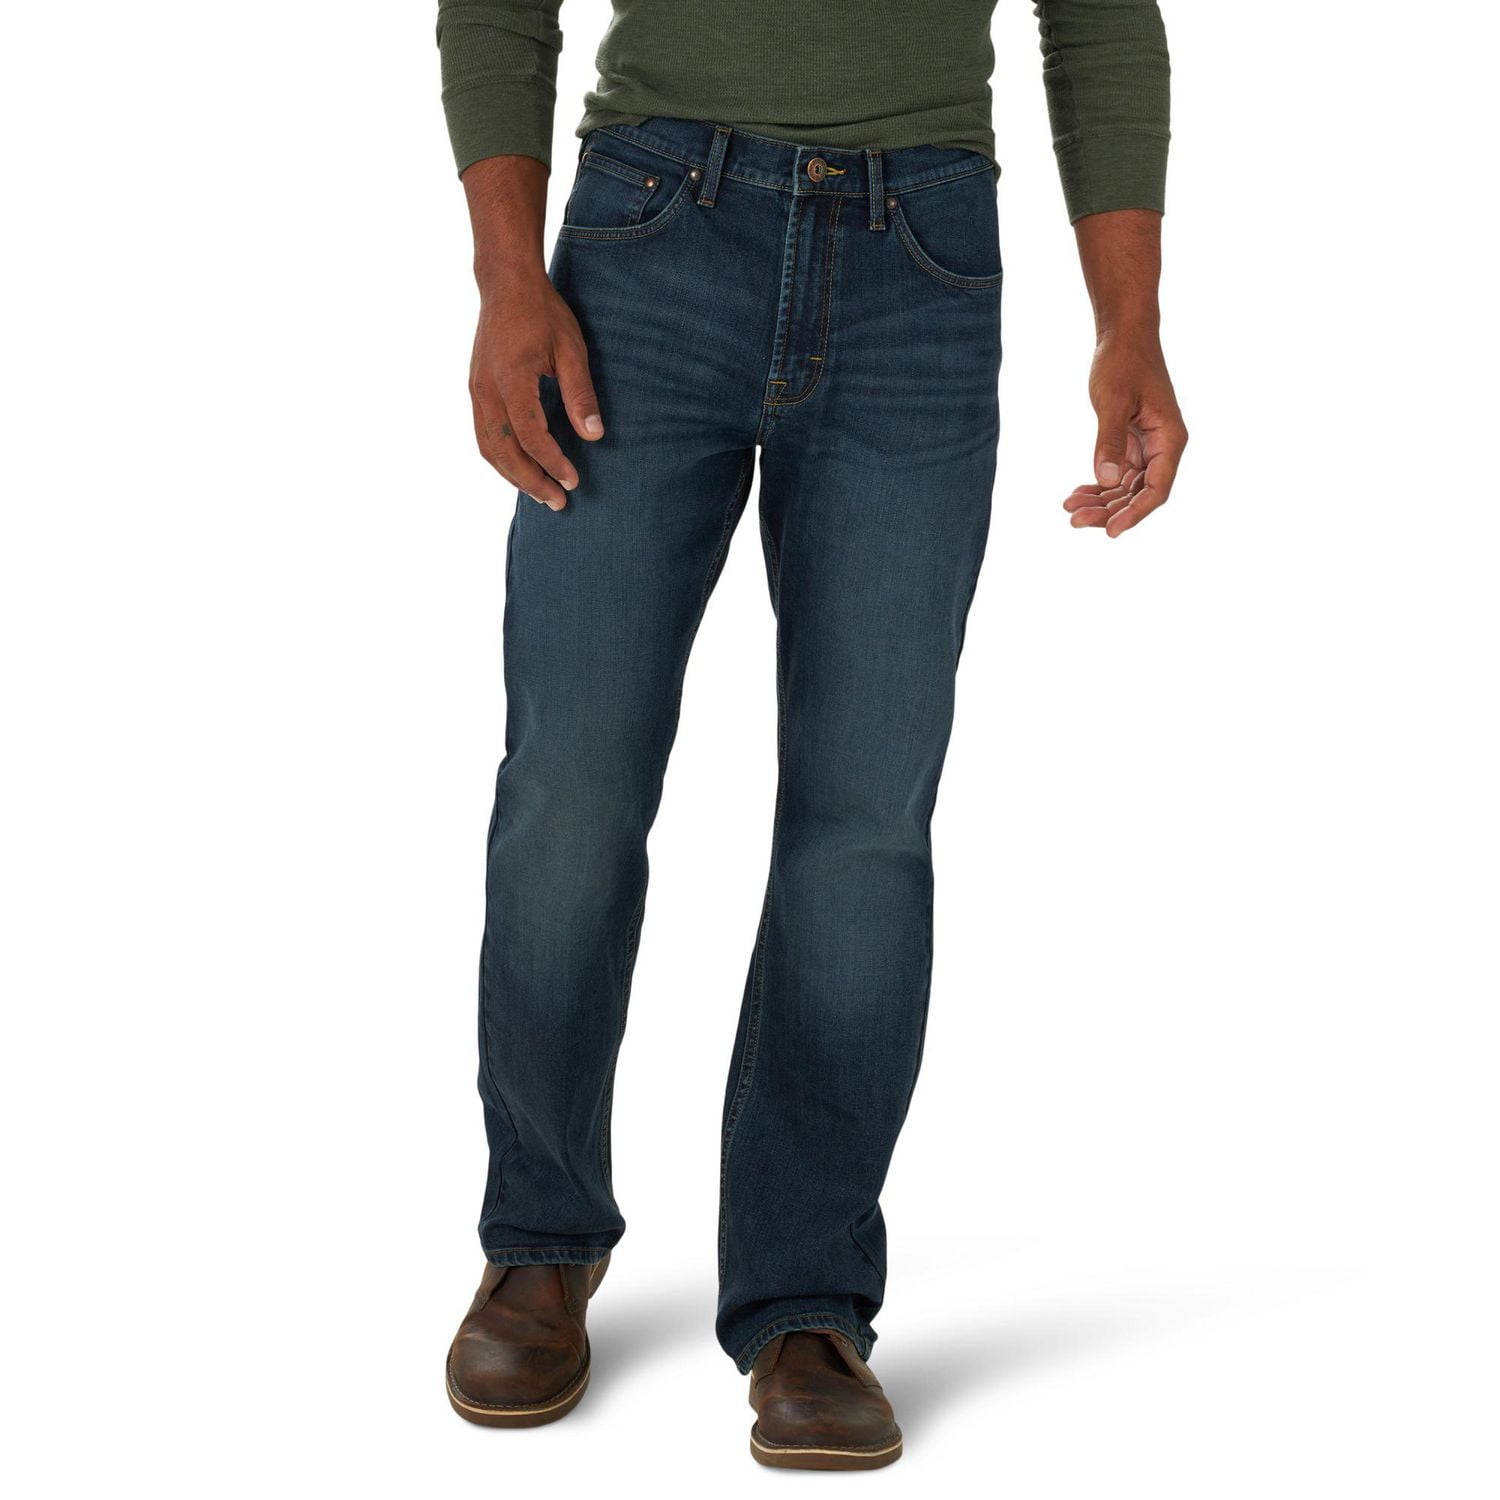 Men's Retro Wrangler Slim Bootcut Jeans (New Dark Wash)